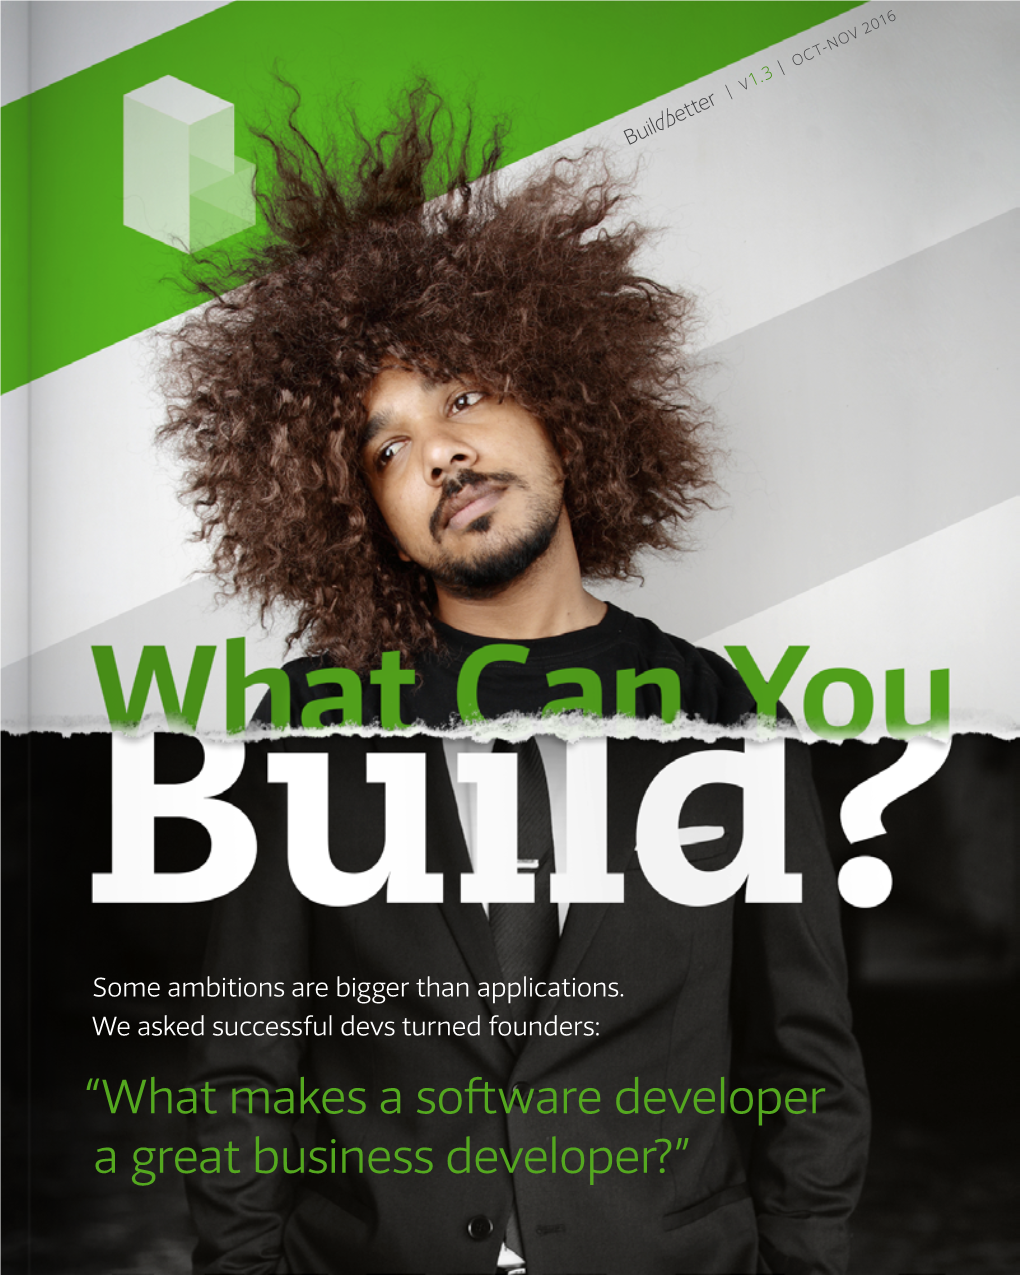 “What Makes a Software Developer a Great Business Developer?” // F E a T U R E S // Oct-Nov ‘16